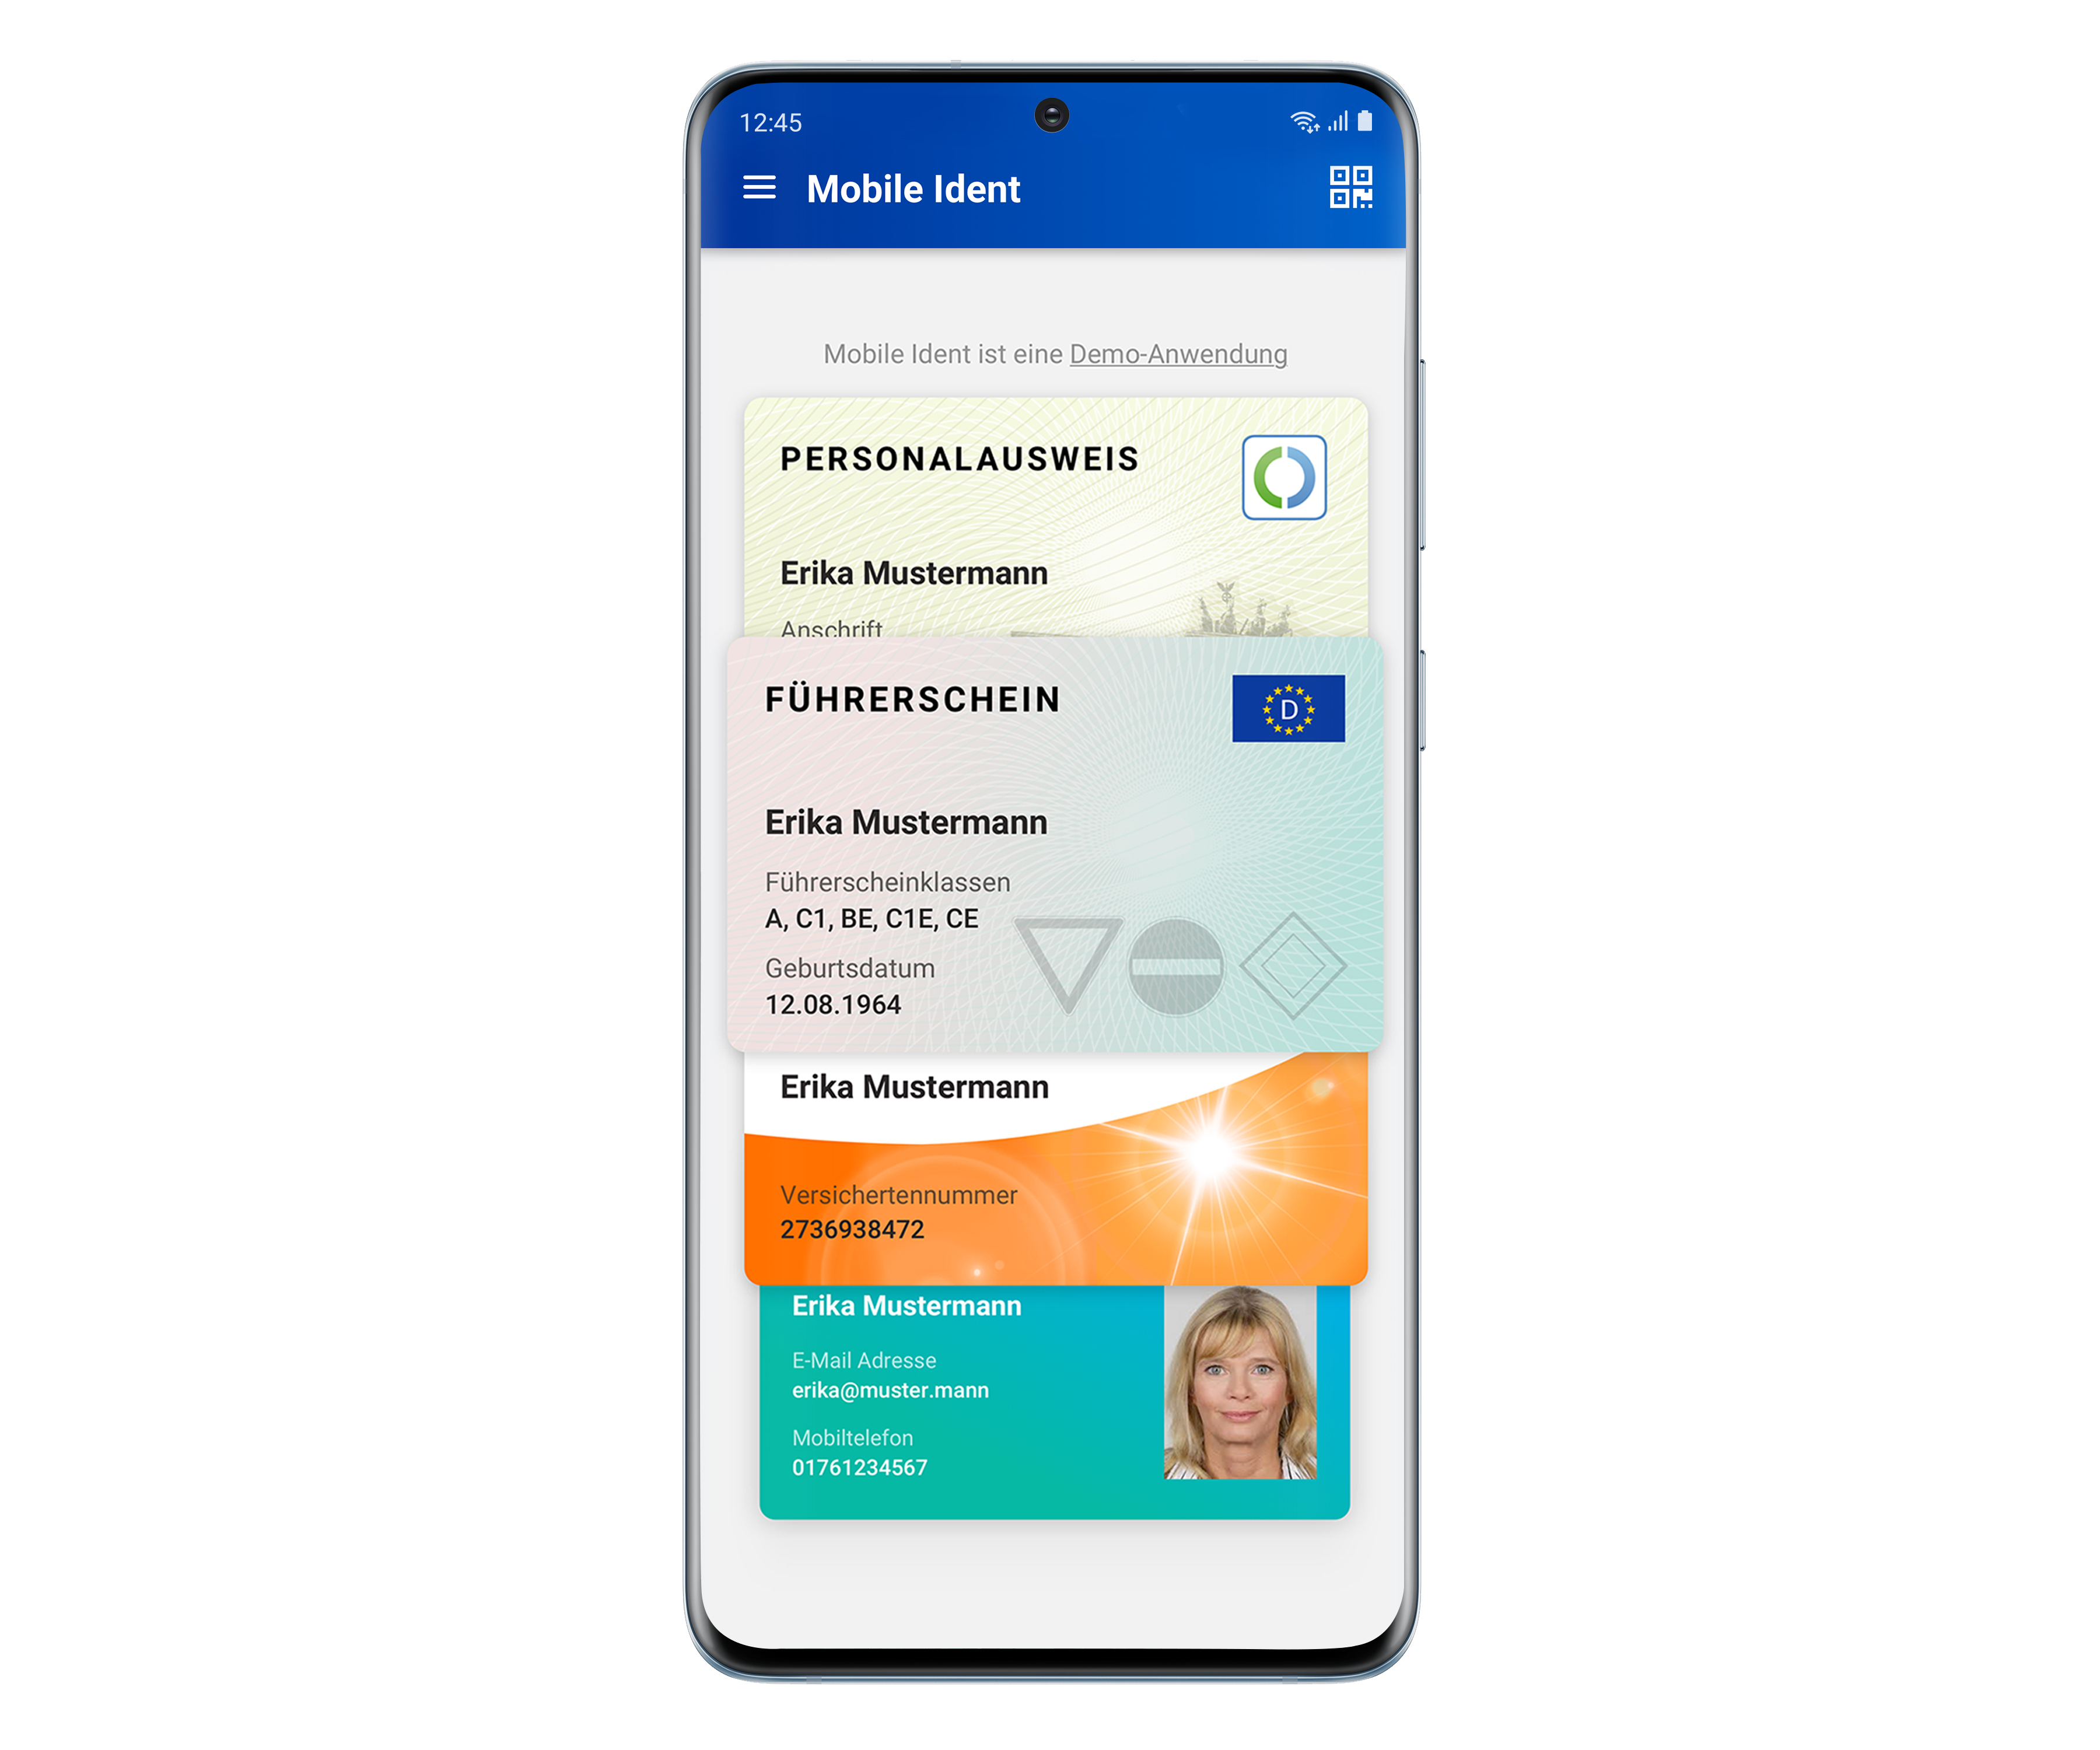 eID Mobile Ident App on the S20